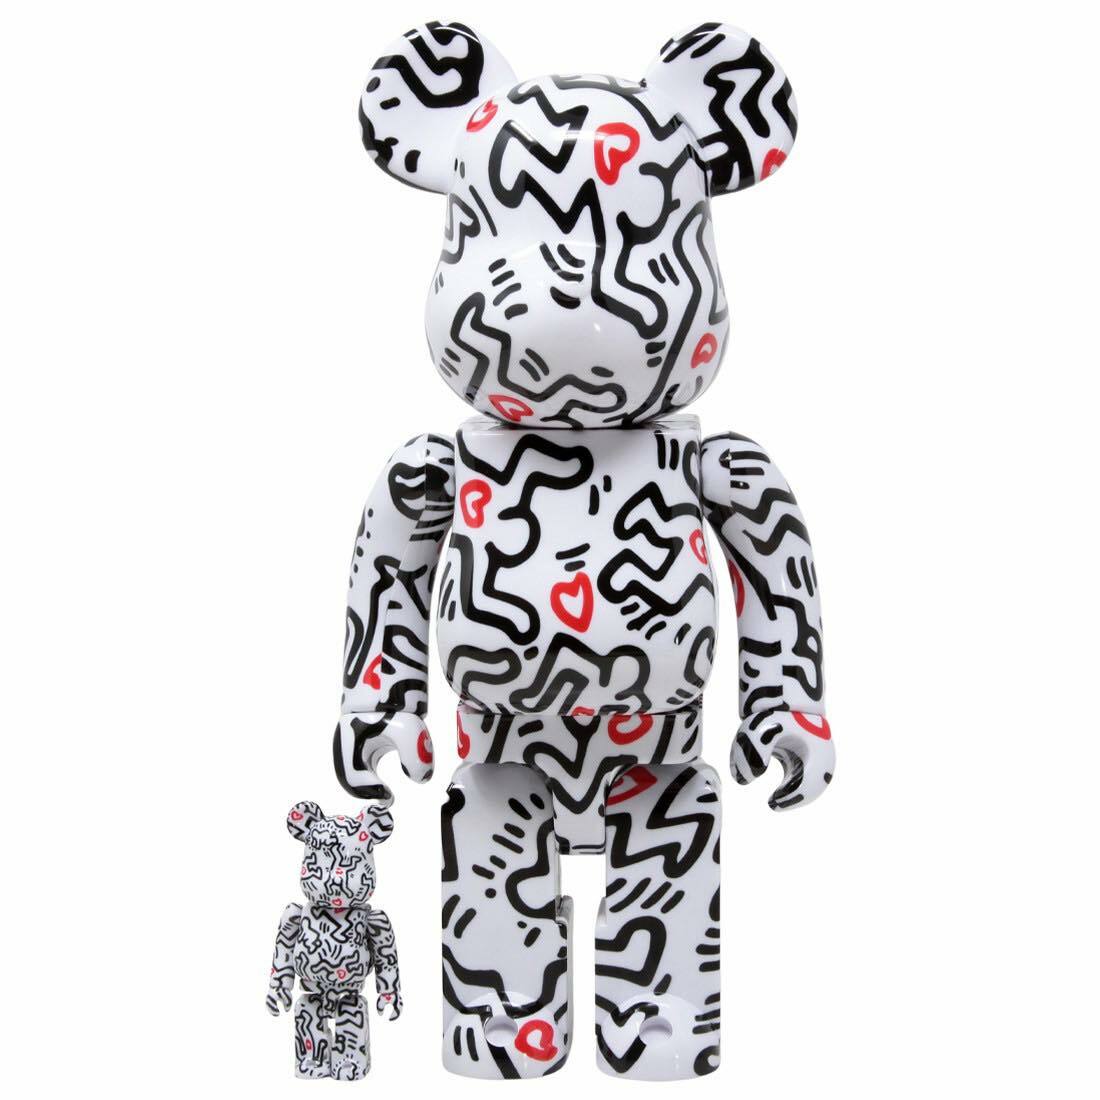 Bearbrick Keith Haring #8 % + %